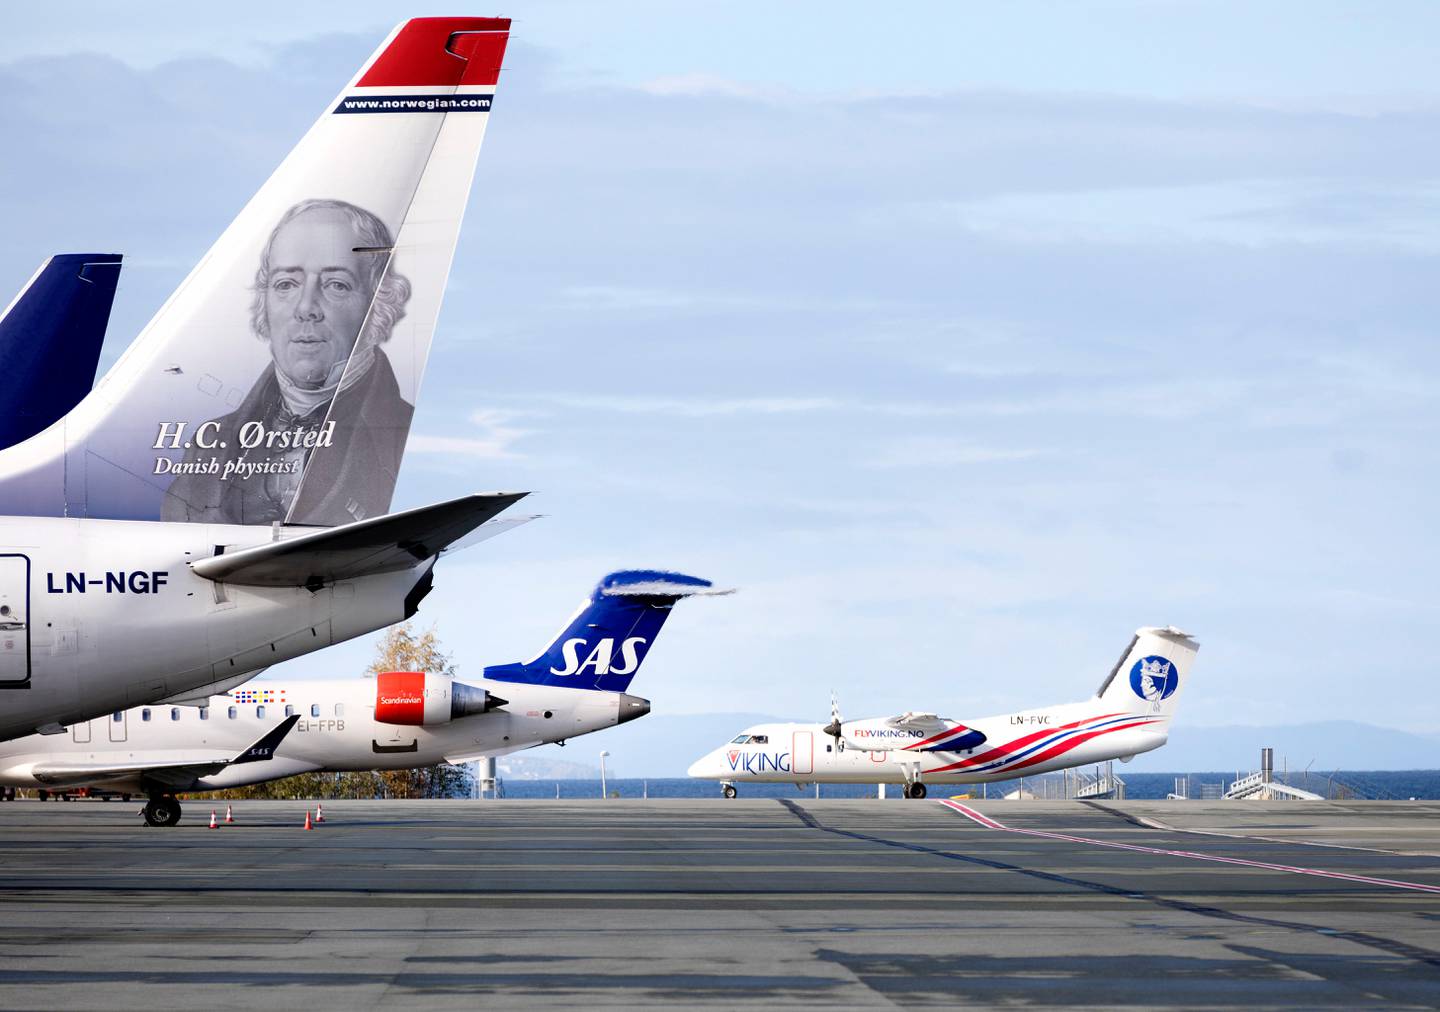 Værnes  20171004.
Flyviking, SAS og Norwegian fly på Værnes lufthavn.
Foto: Gorm Kallestad / NTB scanpix